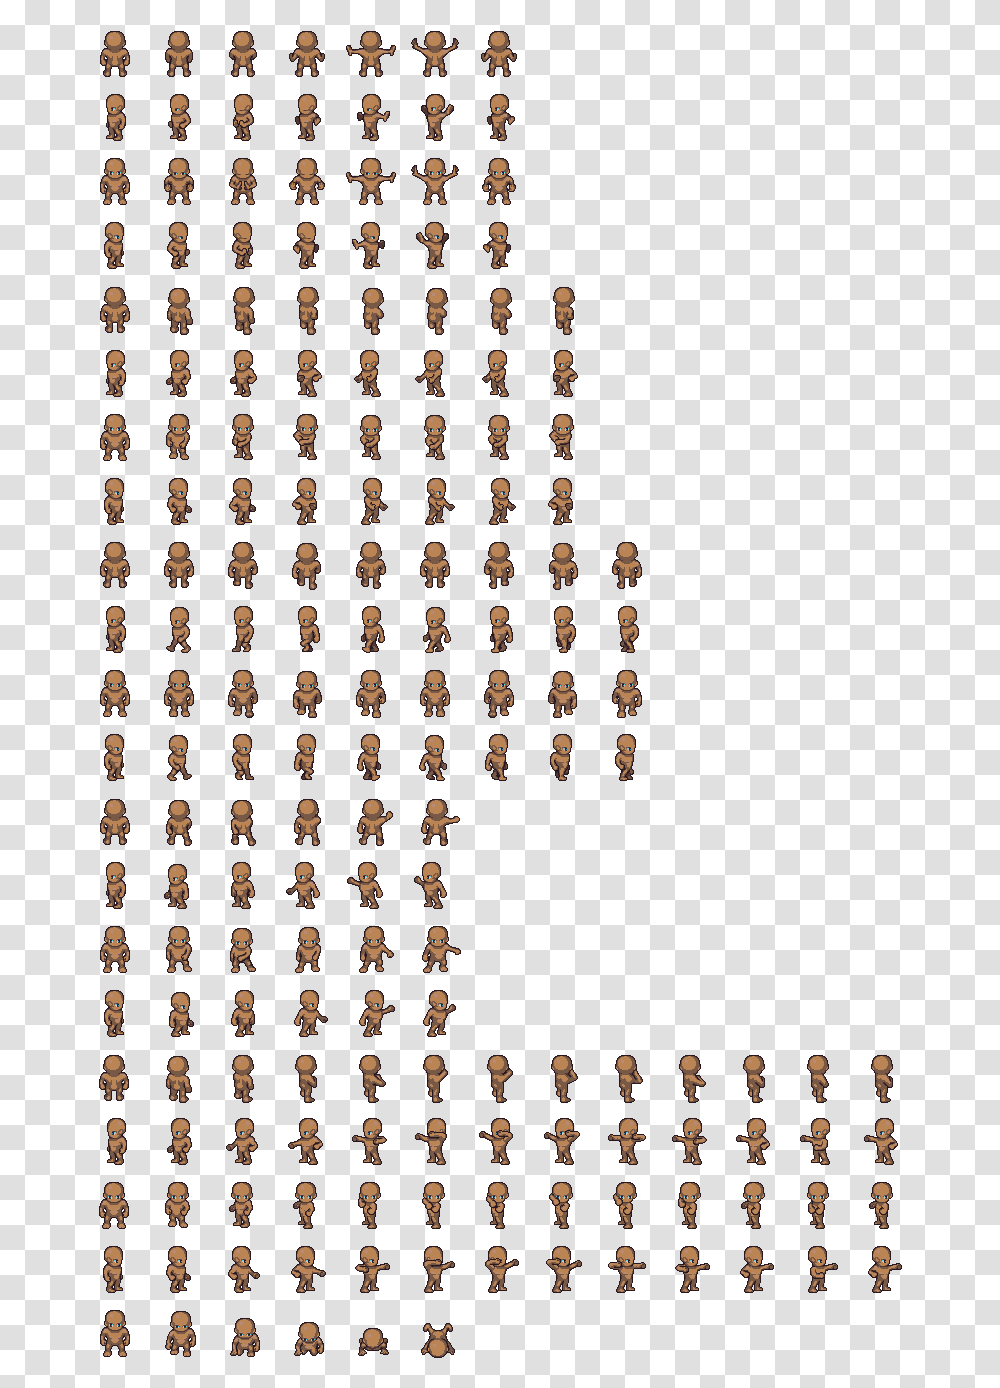 Pixel Art Character Sprite Sheet Character Sprite Sheet Template, Number Transparent Png